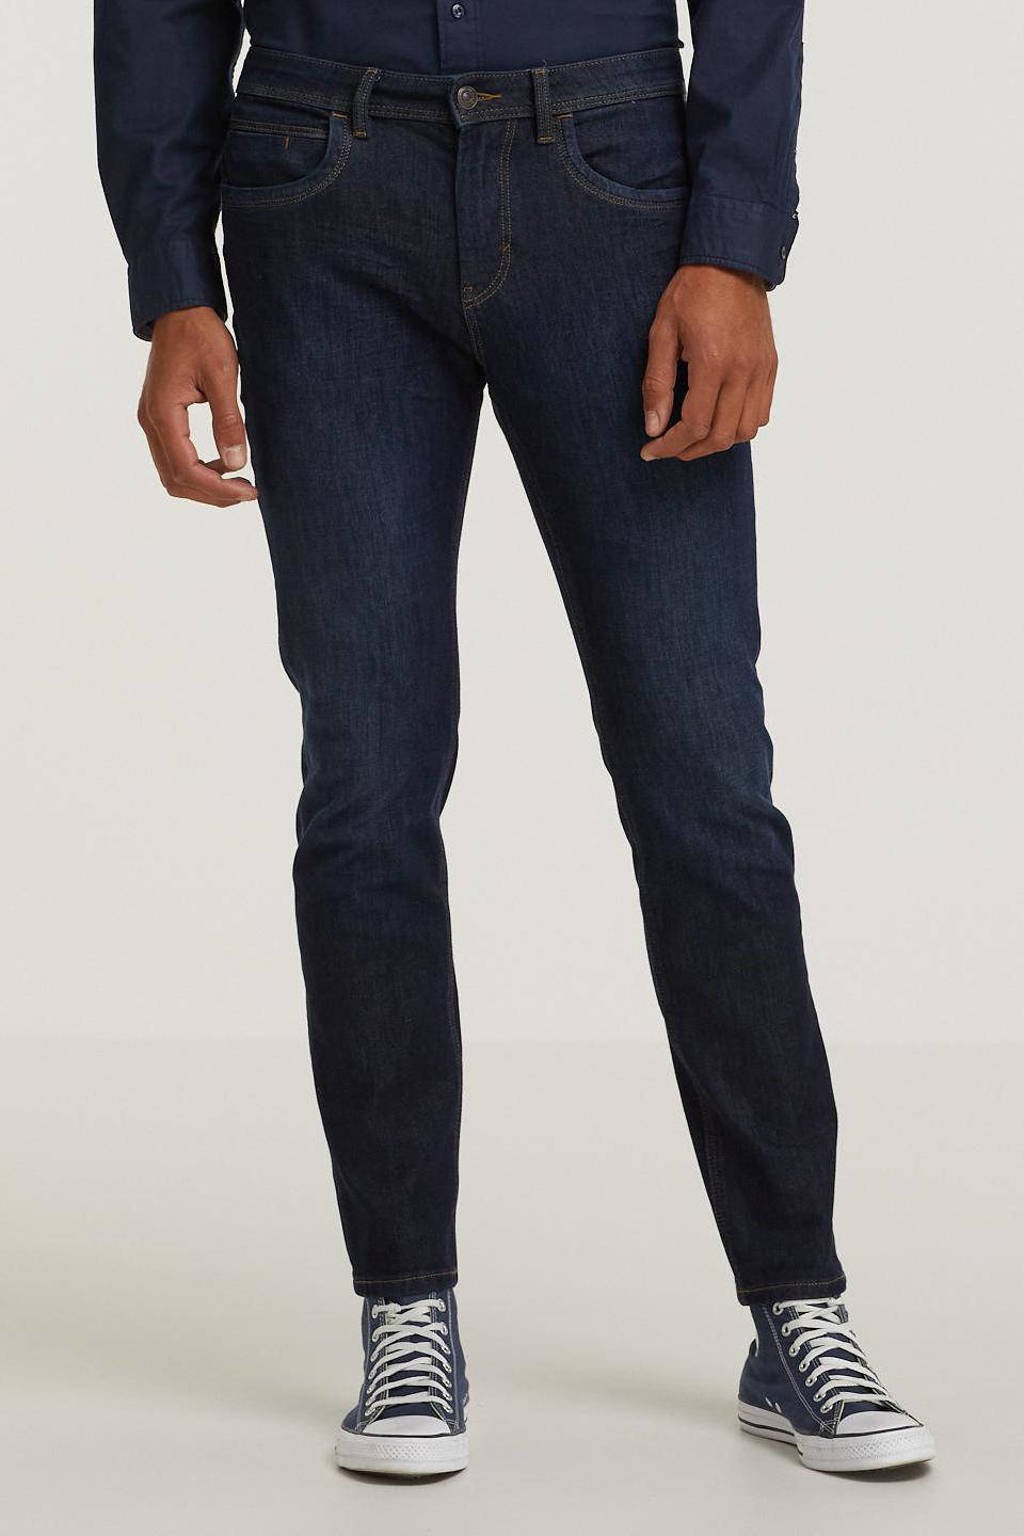 Tom Tailor slim fit jeans Josh 10138 rinsed blue denim, 10138 Rinsed Blue Denim